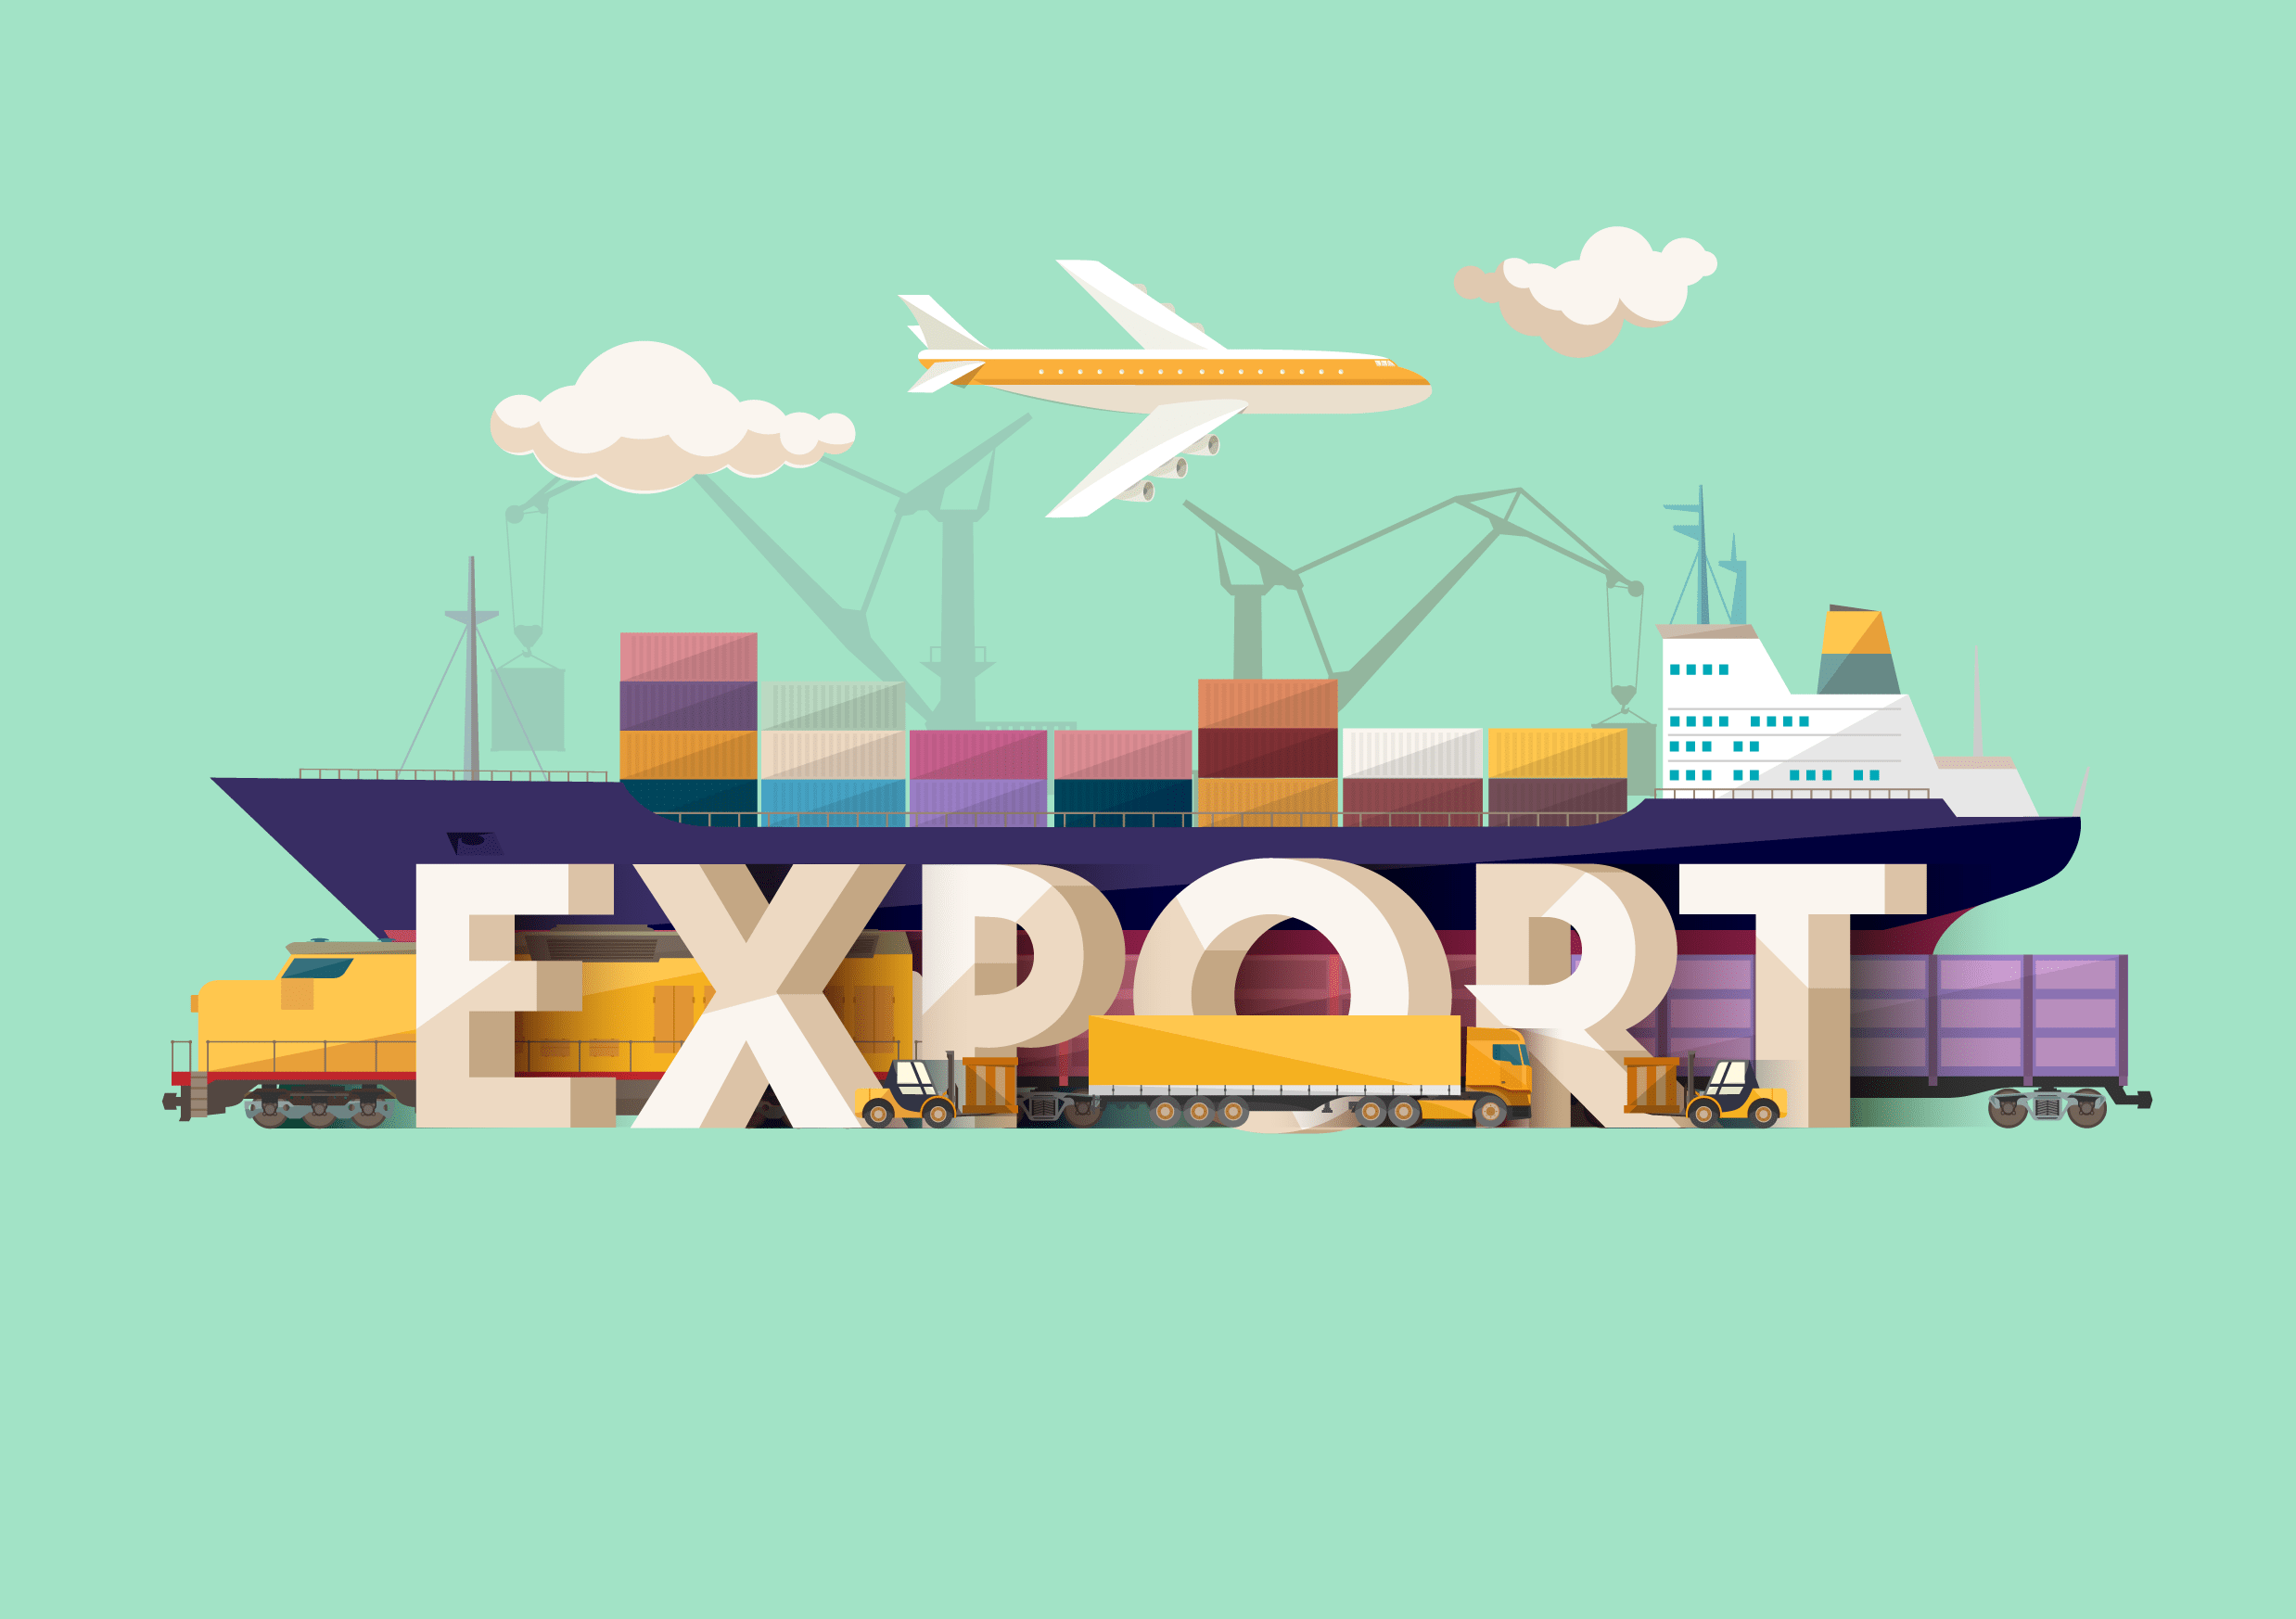 Bulgaria’s Exports Exceed 50 Billion Dollars